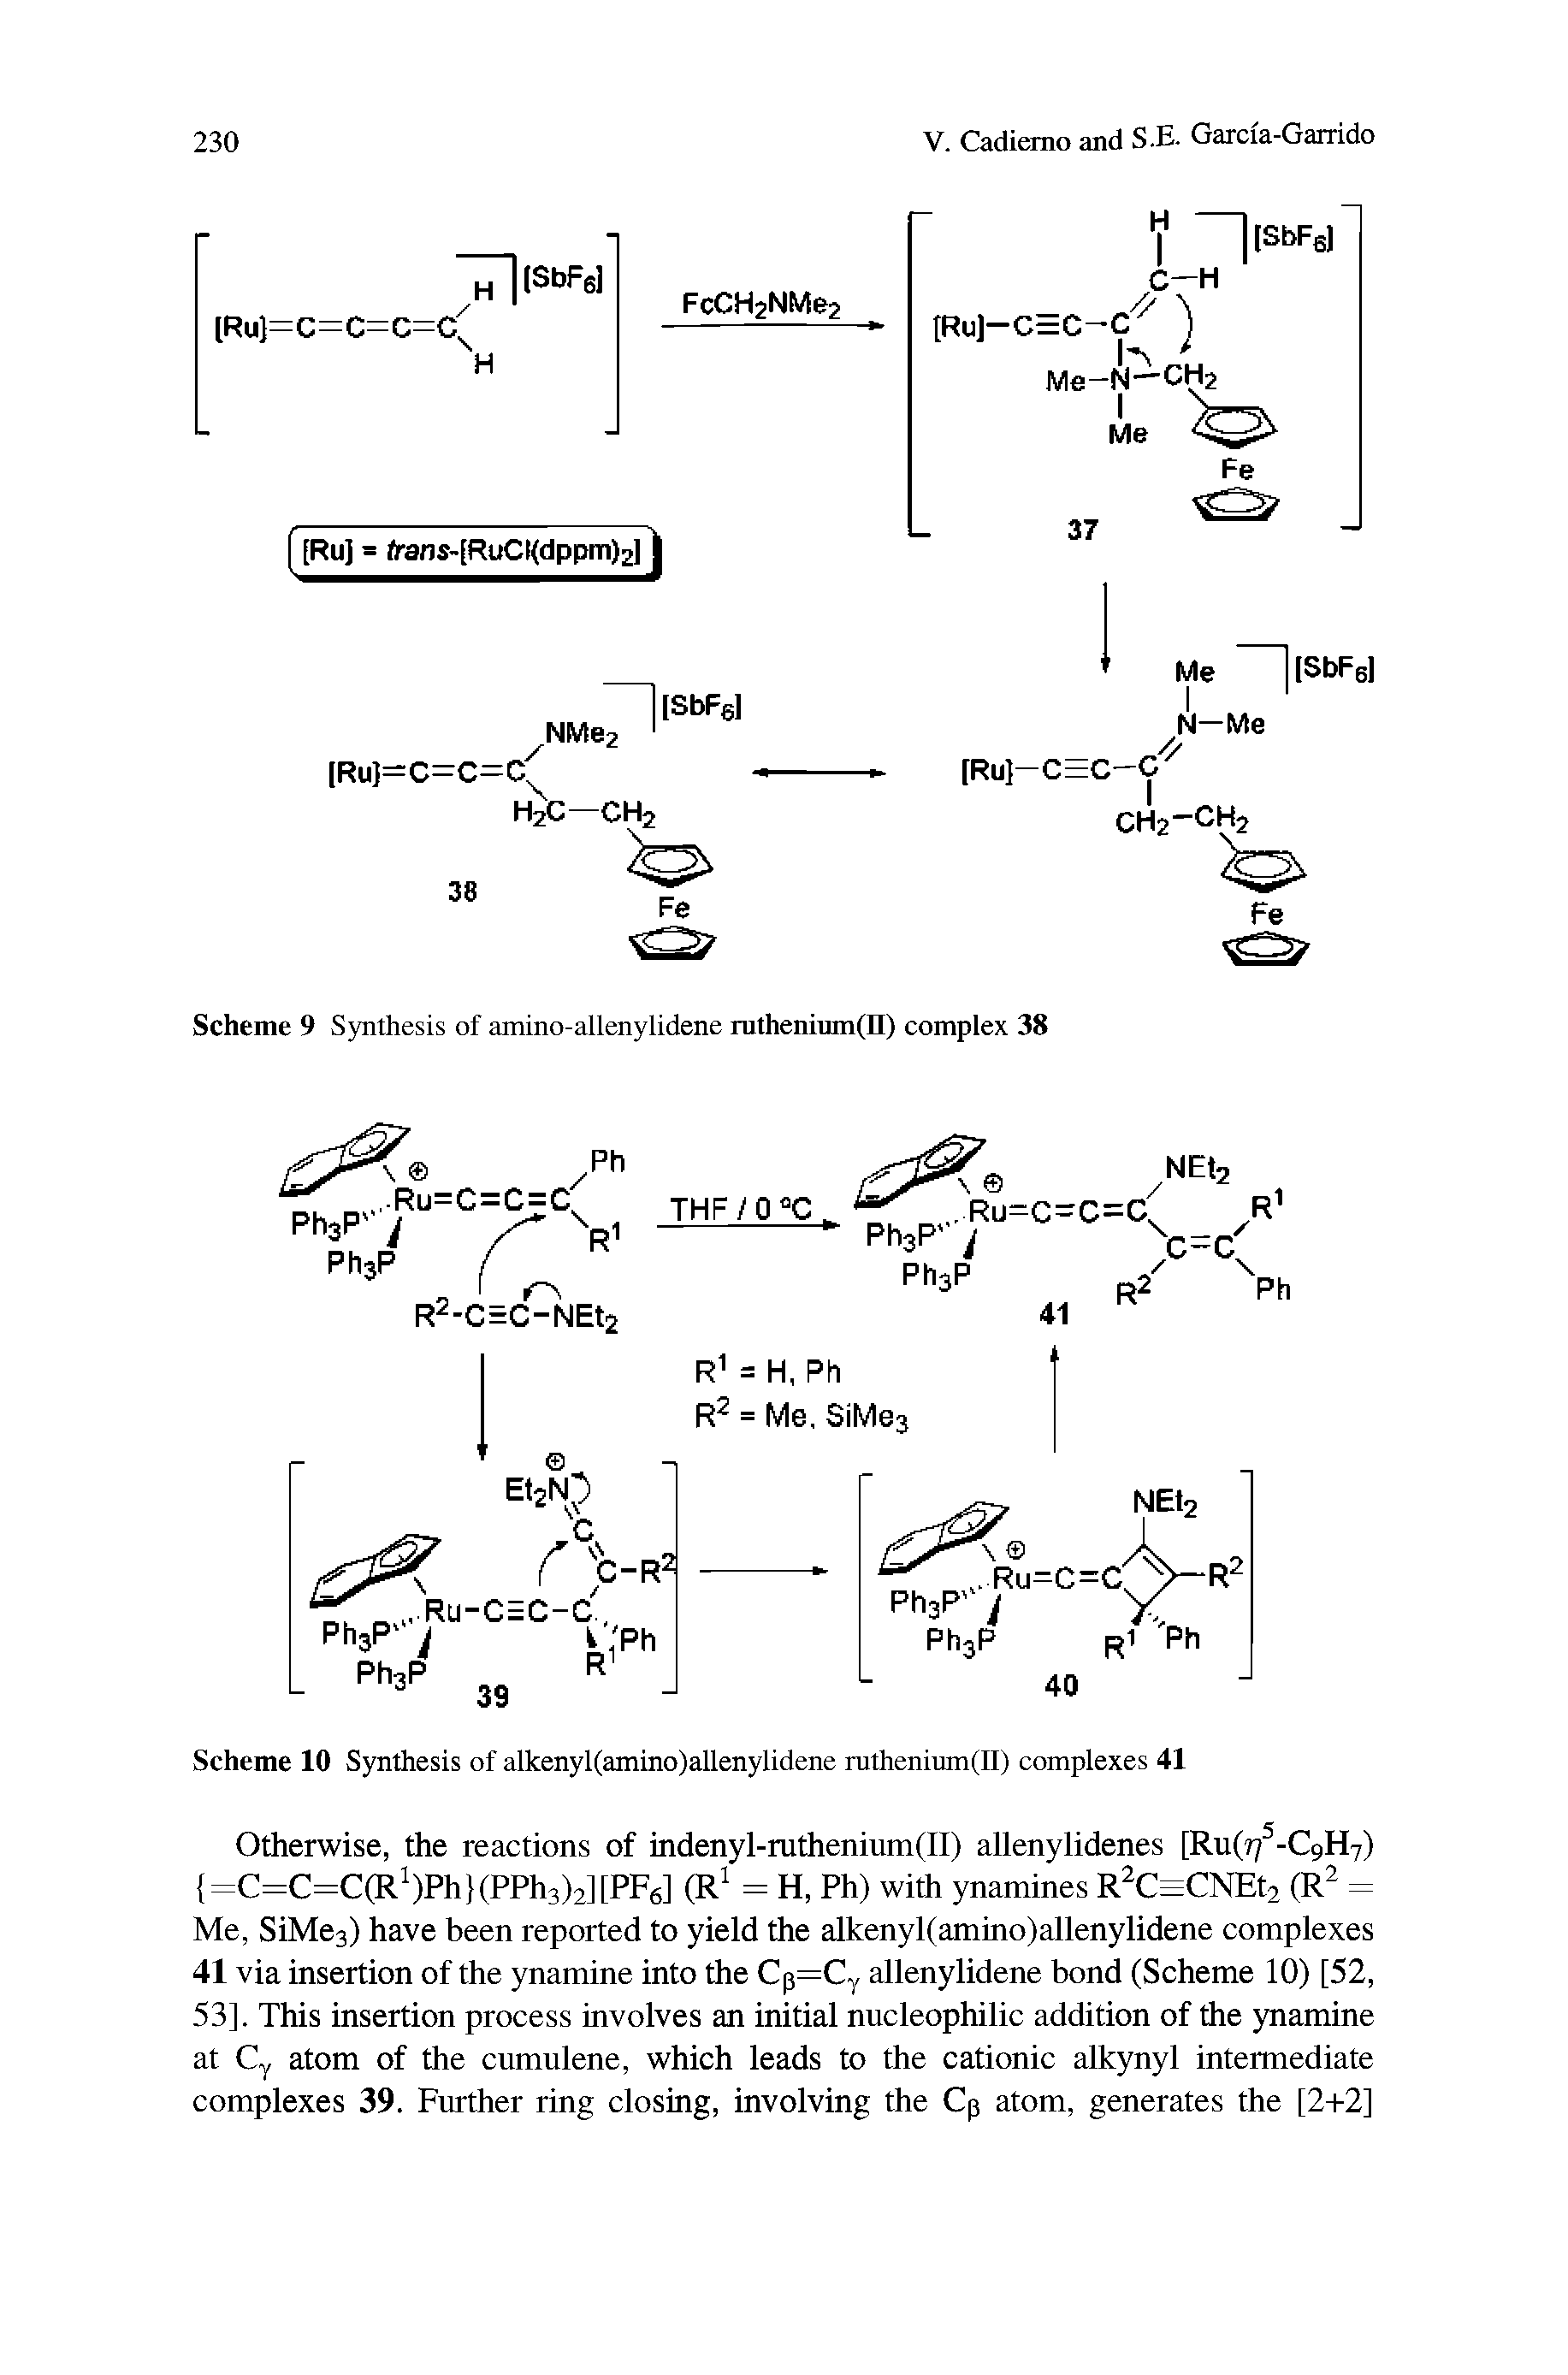 Scheme 10 Synthesis of alkenyl(amino)allenylidene ruthenium(II) complexes 41...